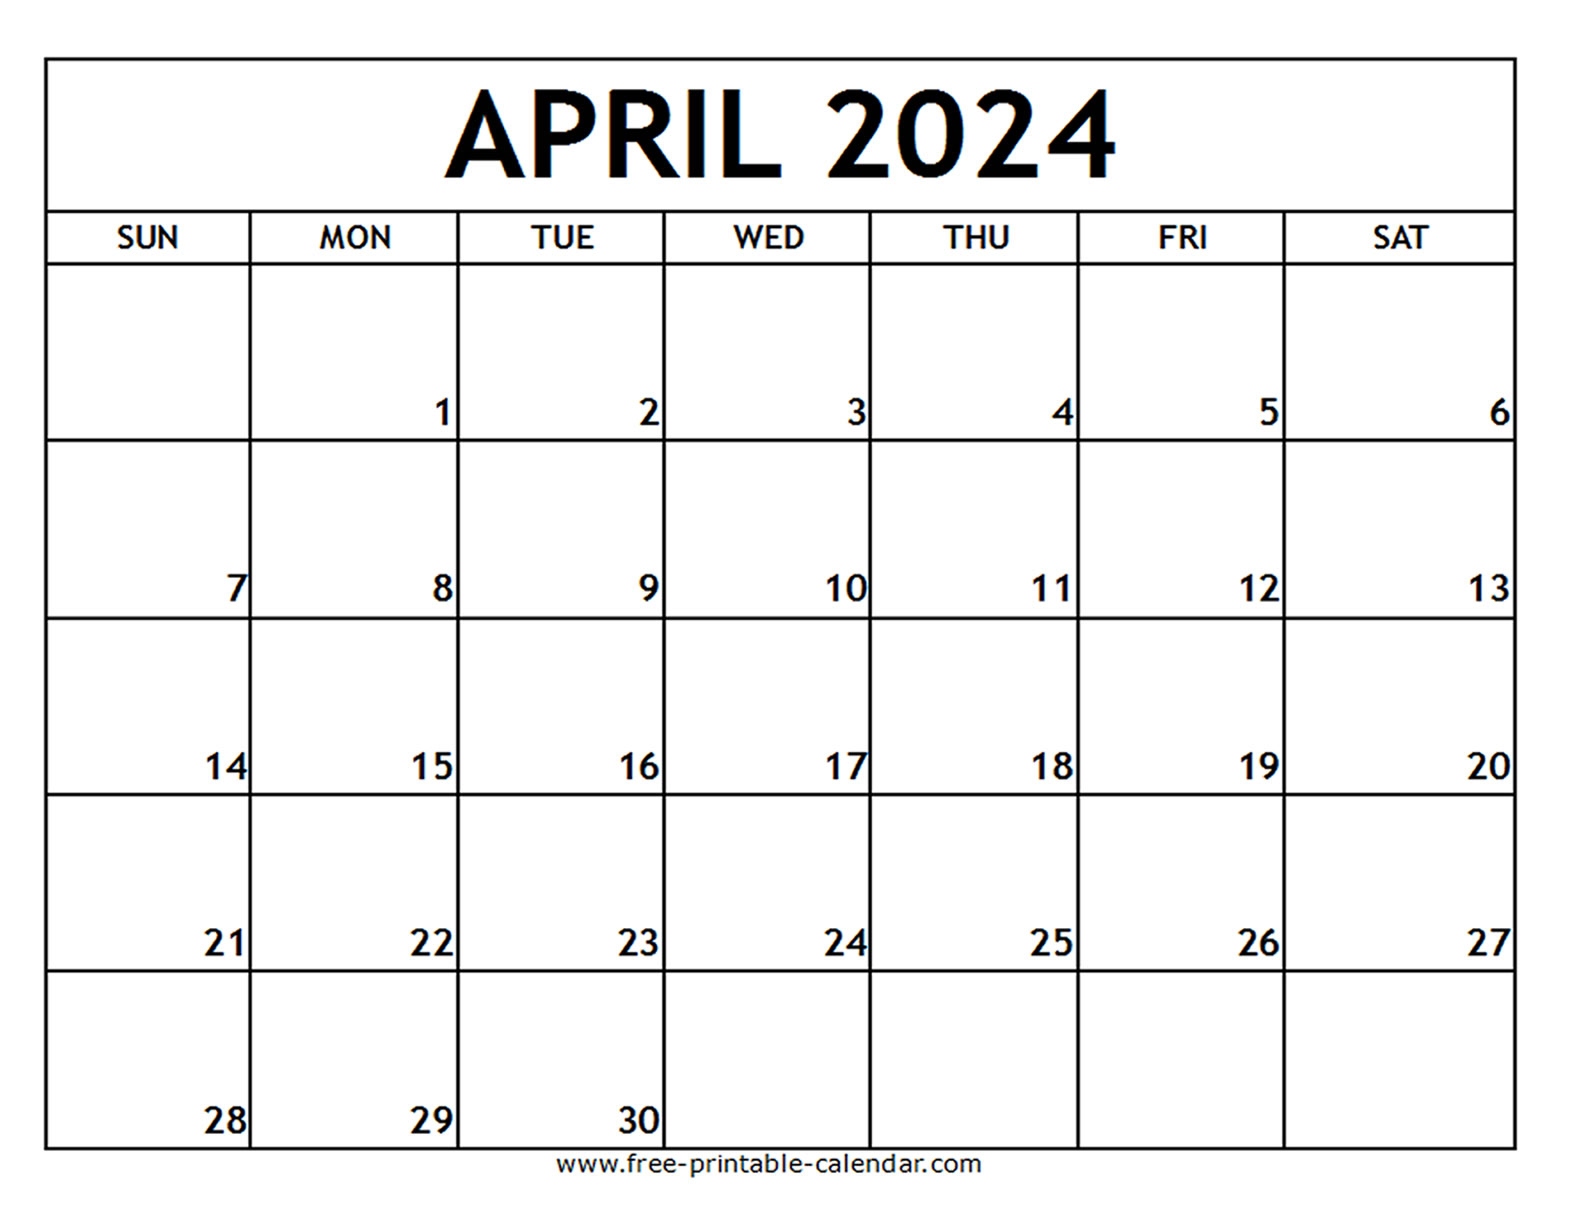 April 2024 Printable Calendar - Free-Printable-Calendar throughout Free Printable April 2024 Calendar Word